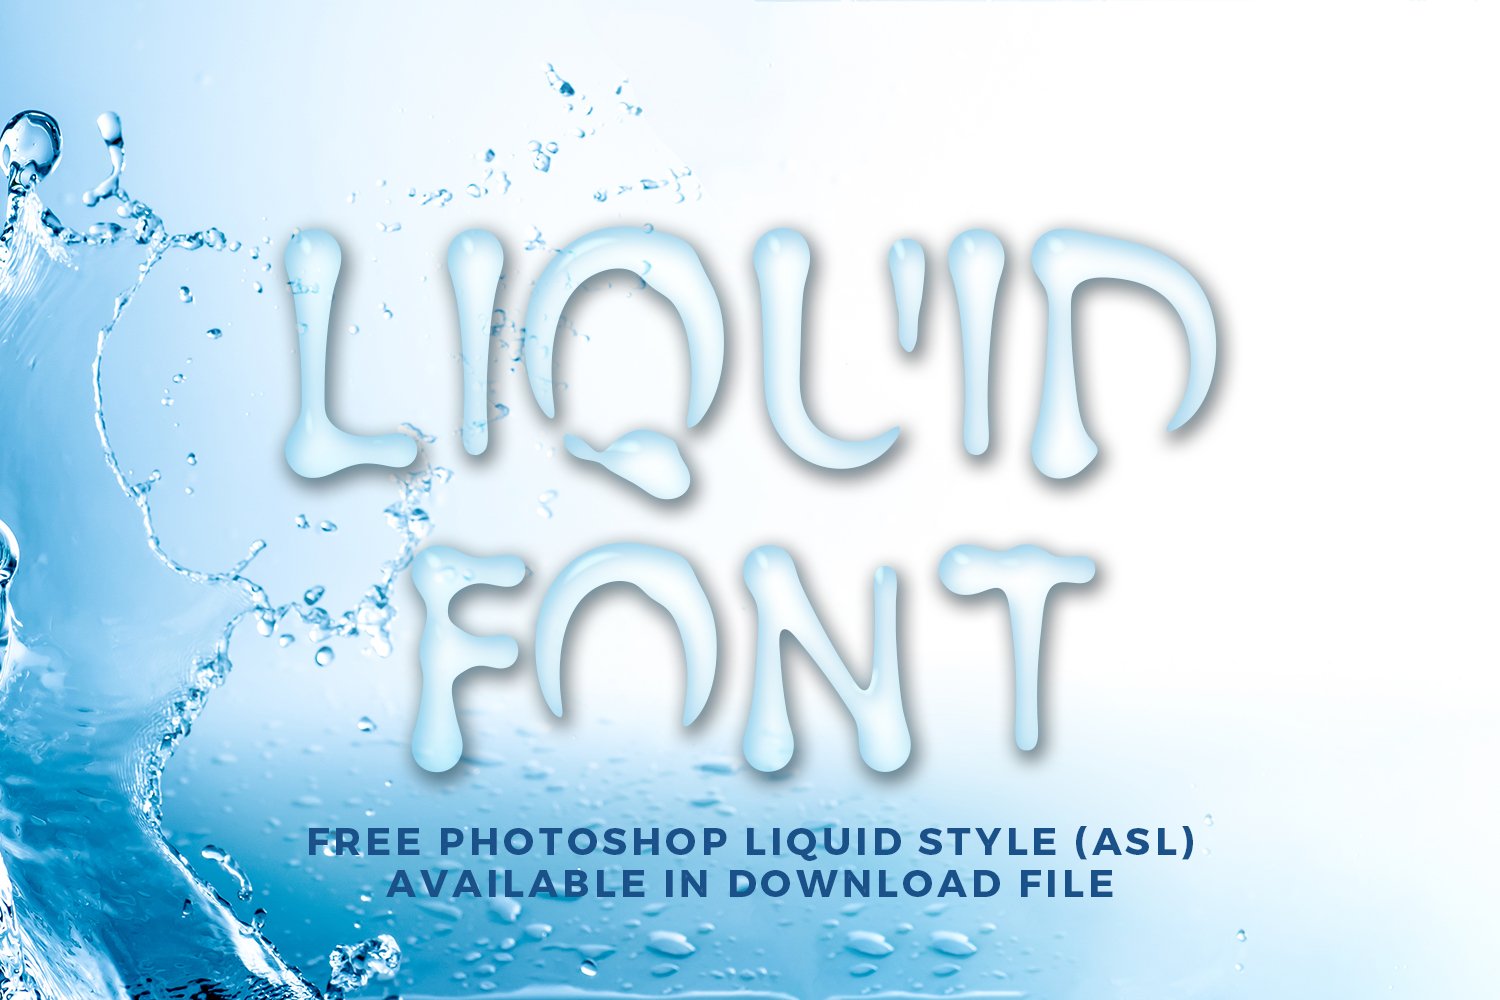 Liquid Font cover image.